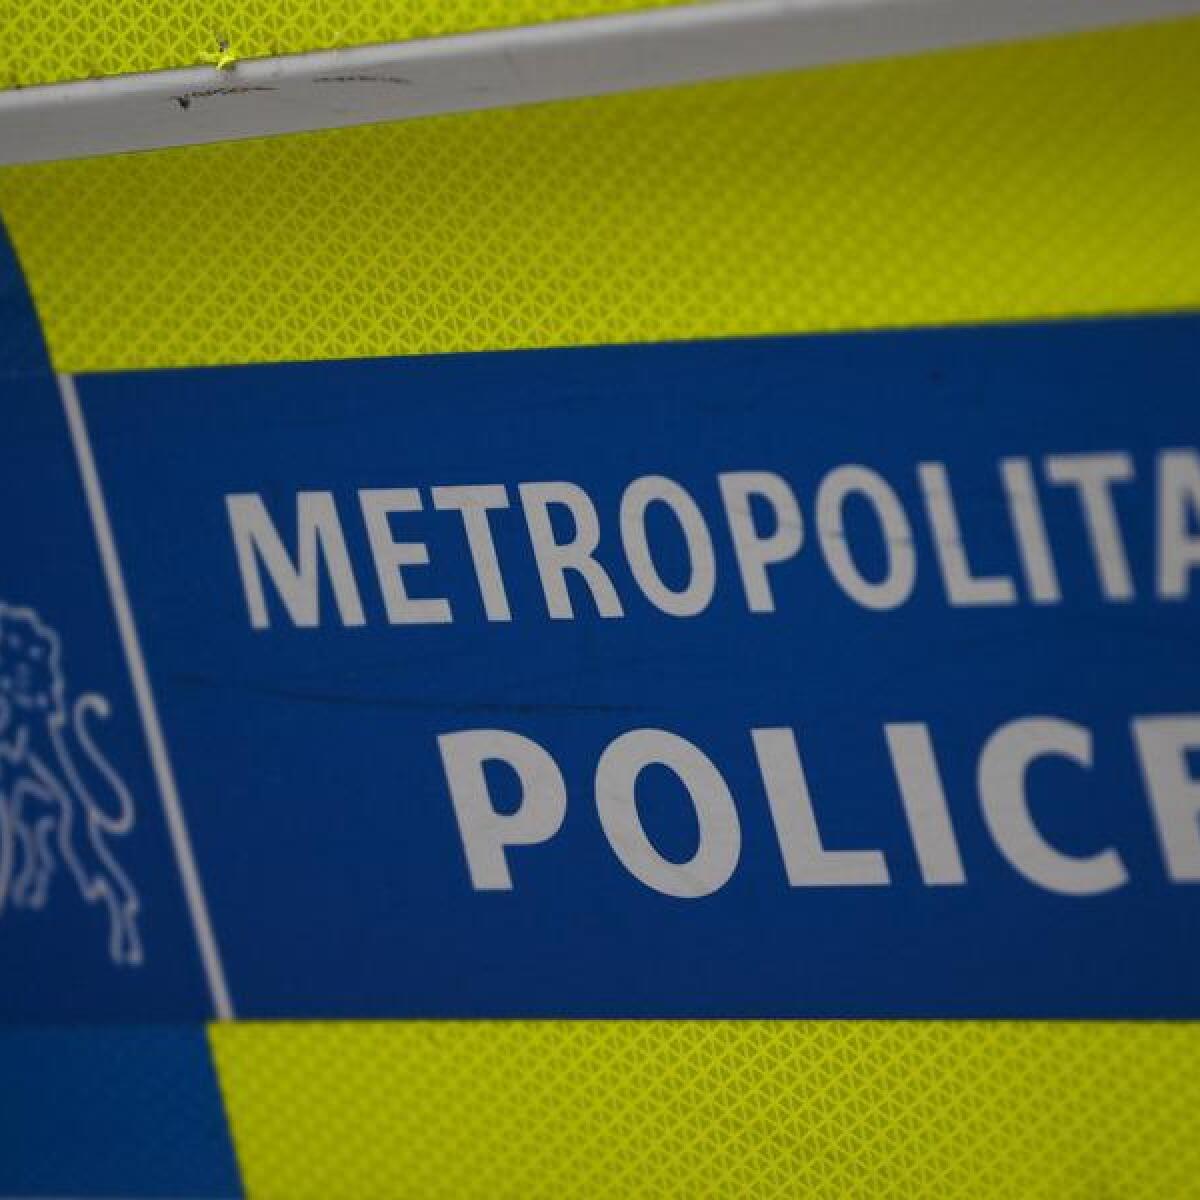 A metropolitan police logo on a vehicle in London, Britain